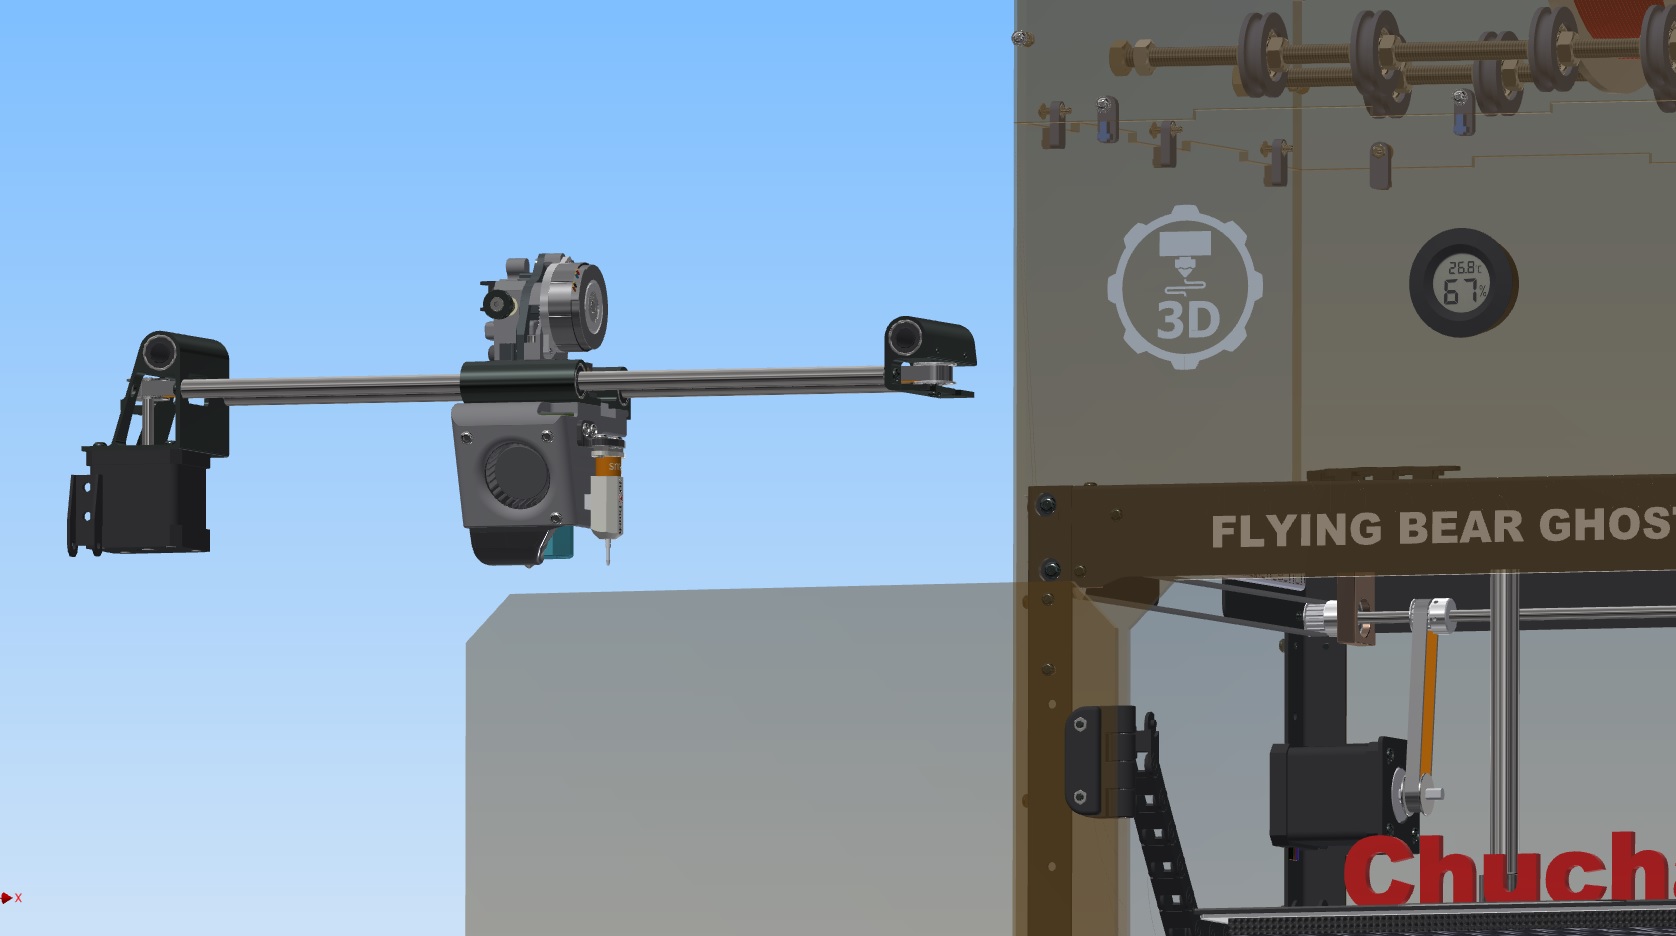 light direct extruder ULTRA  for Flyingbear Ghost 5